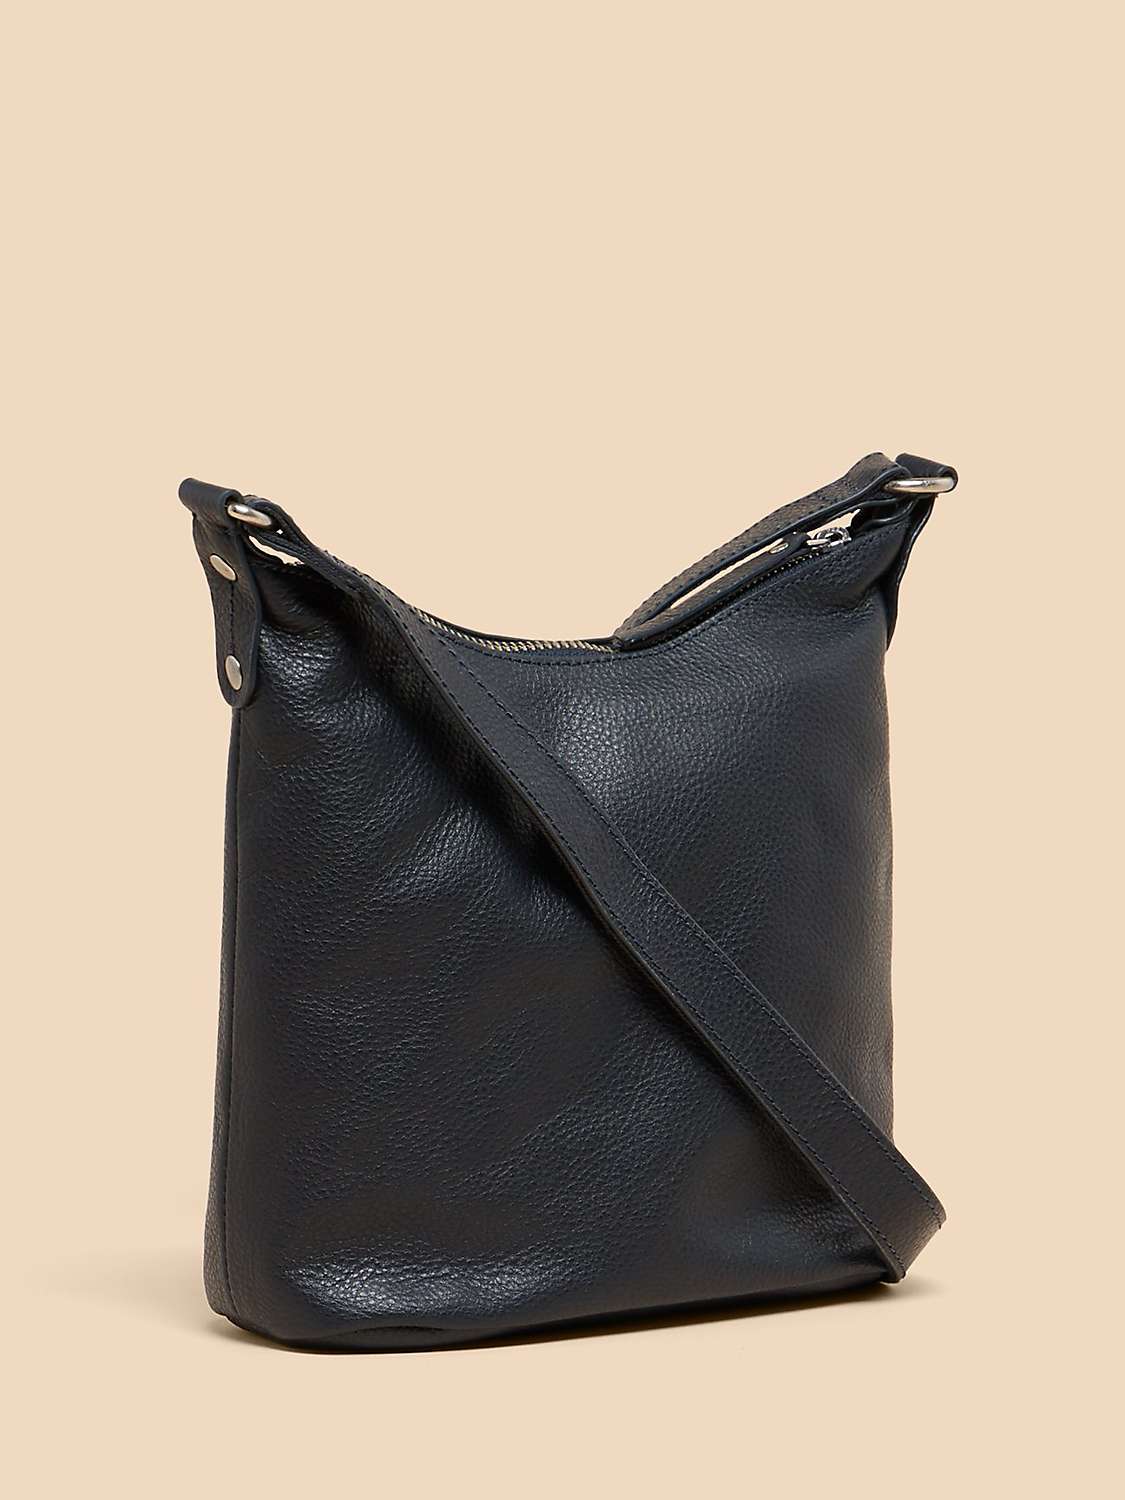 Buy White Stuff Mini Fern Leather Cross Body Bag Online at johnlewis.com